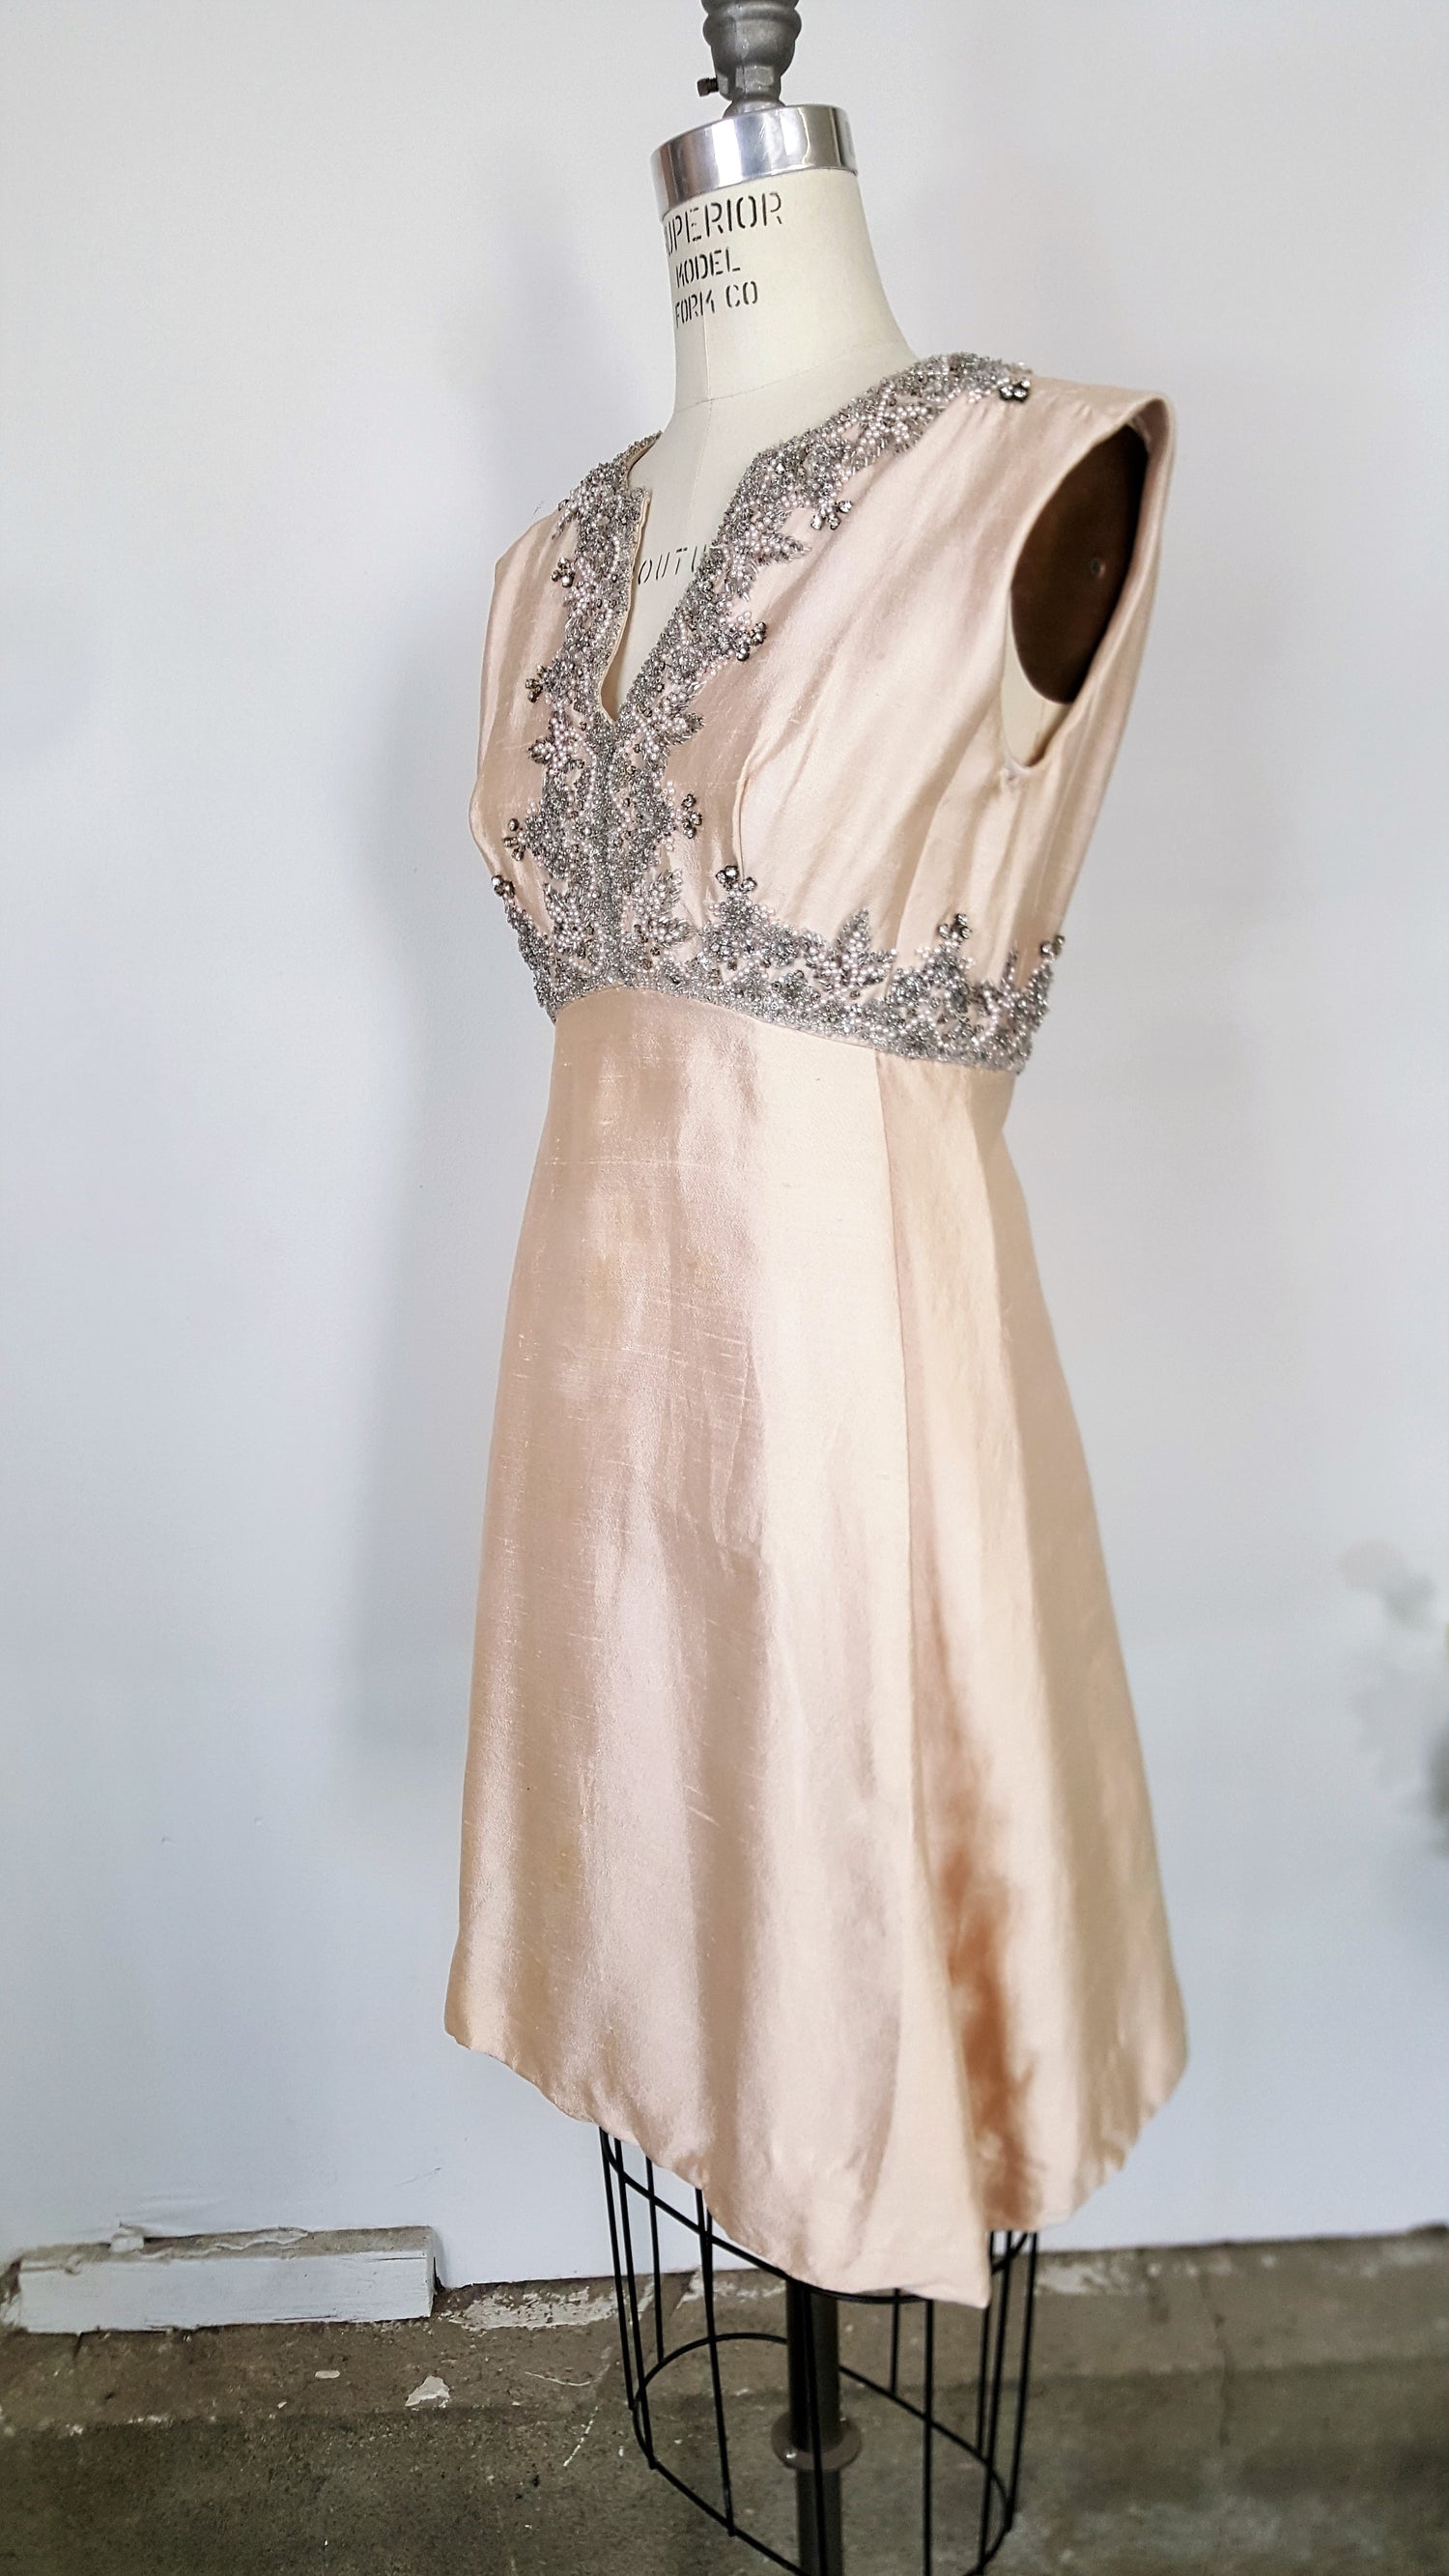 Vintage 1960s Pink Sik Beaded Party Dress By Seaton Enterprises